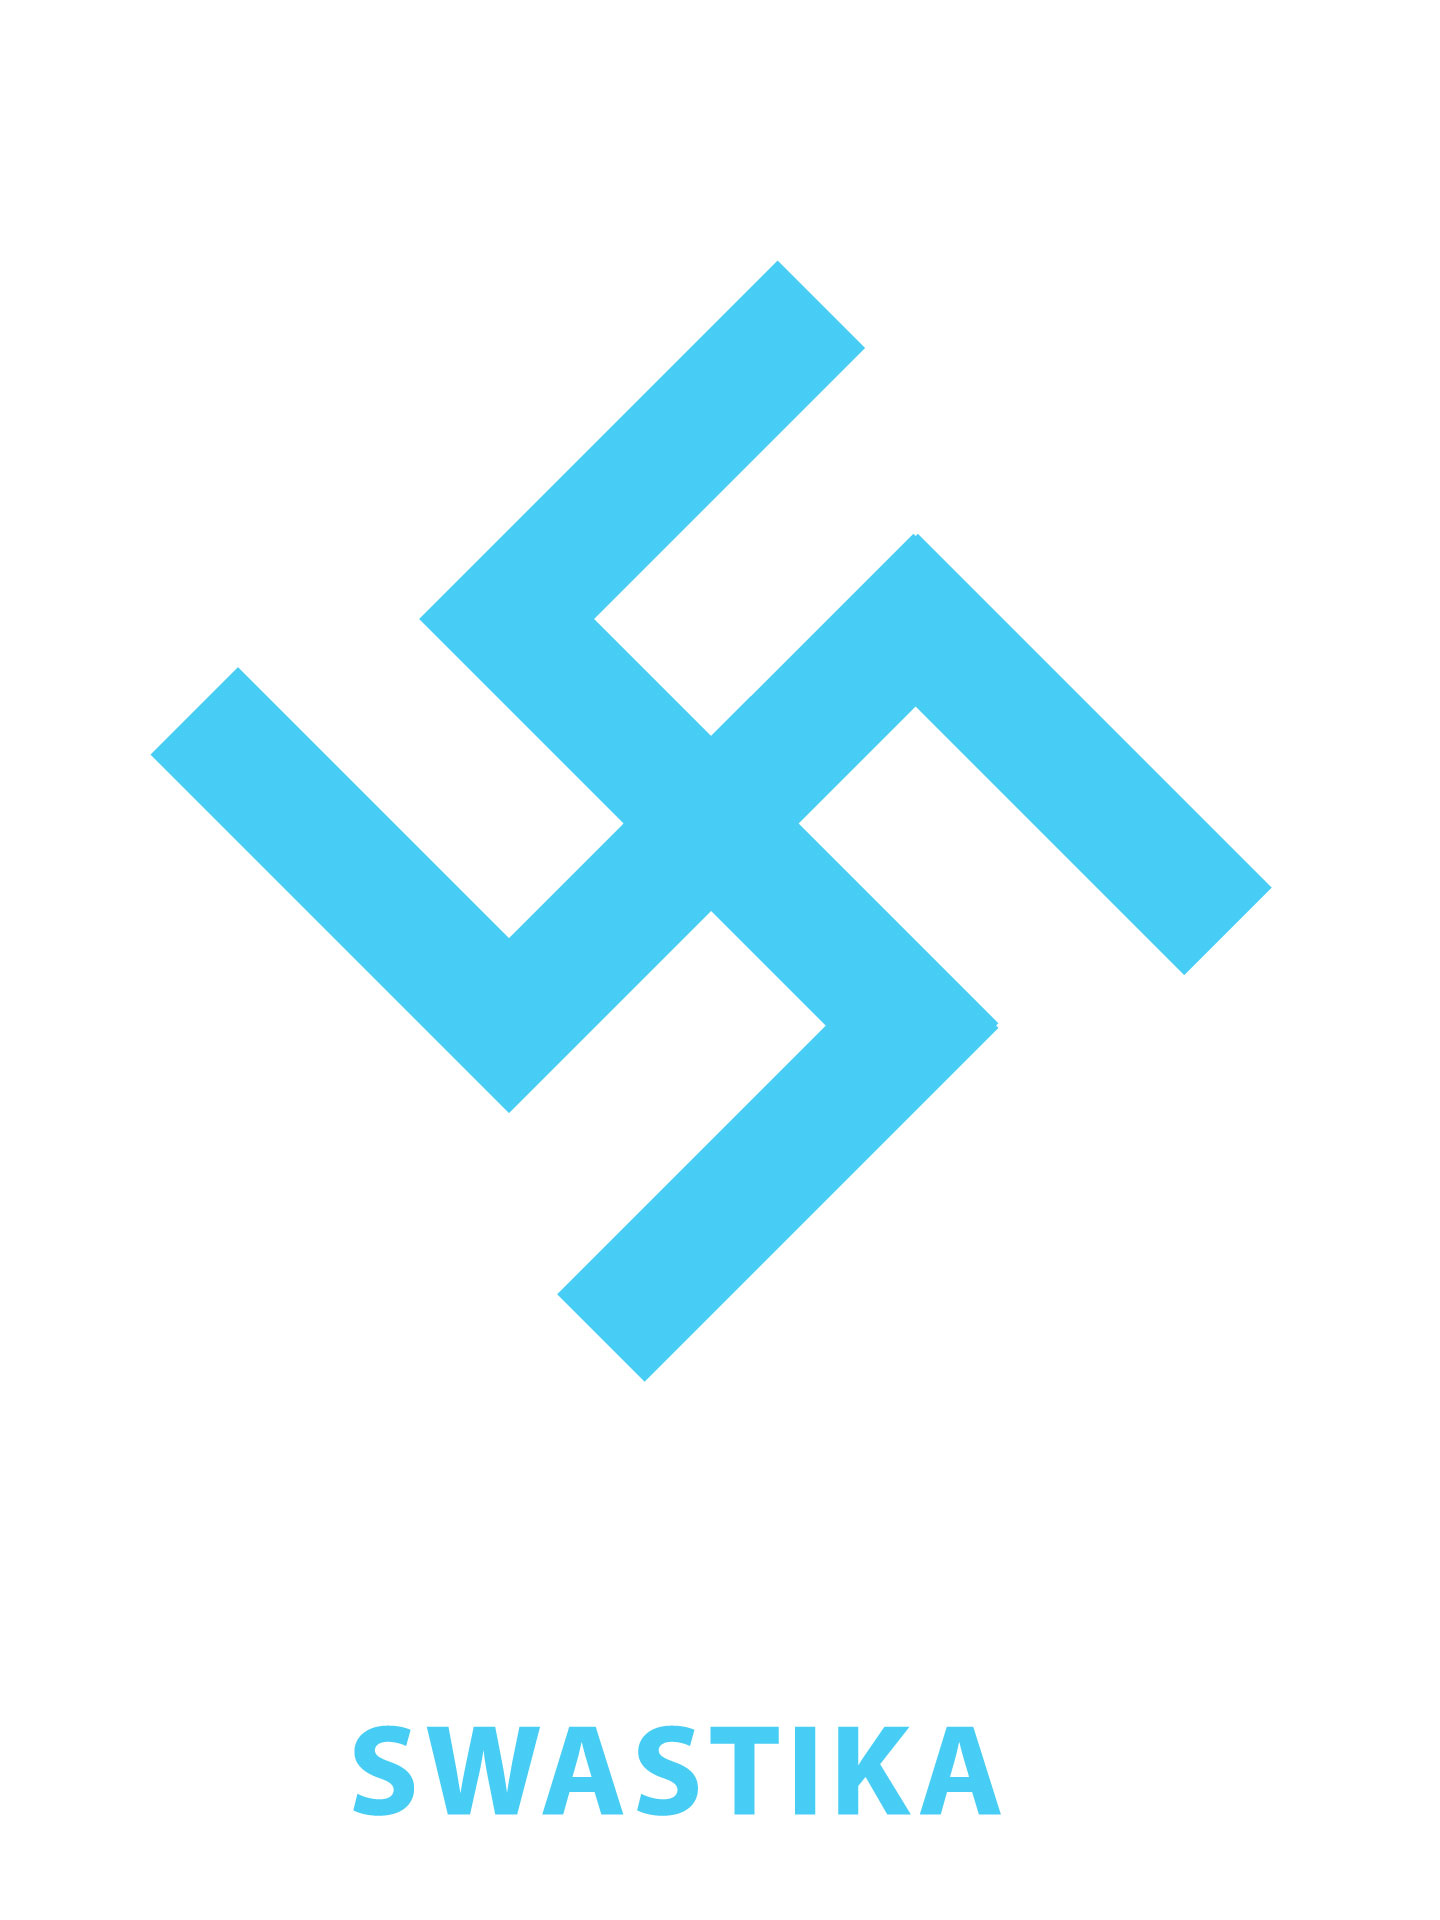 Illustration of a Swastika by NFT Latinx Womnx decolonizing artist